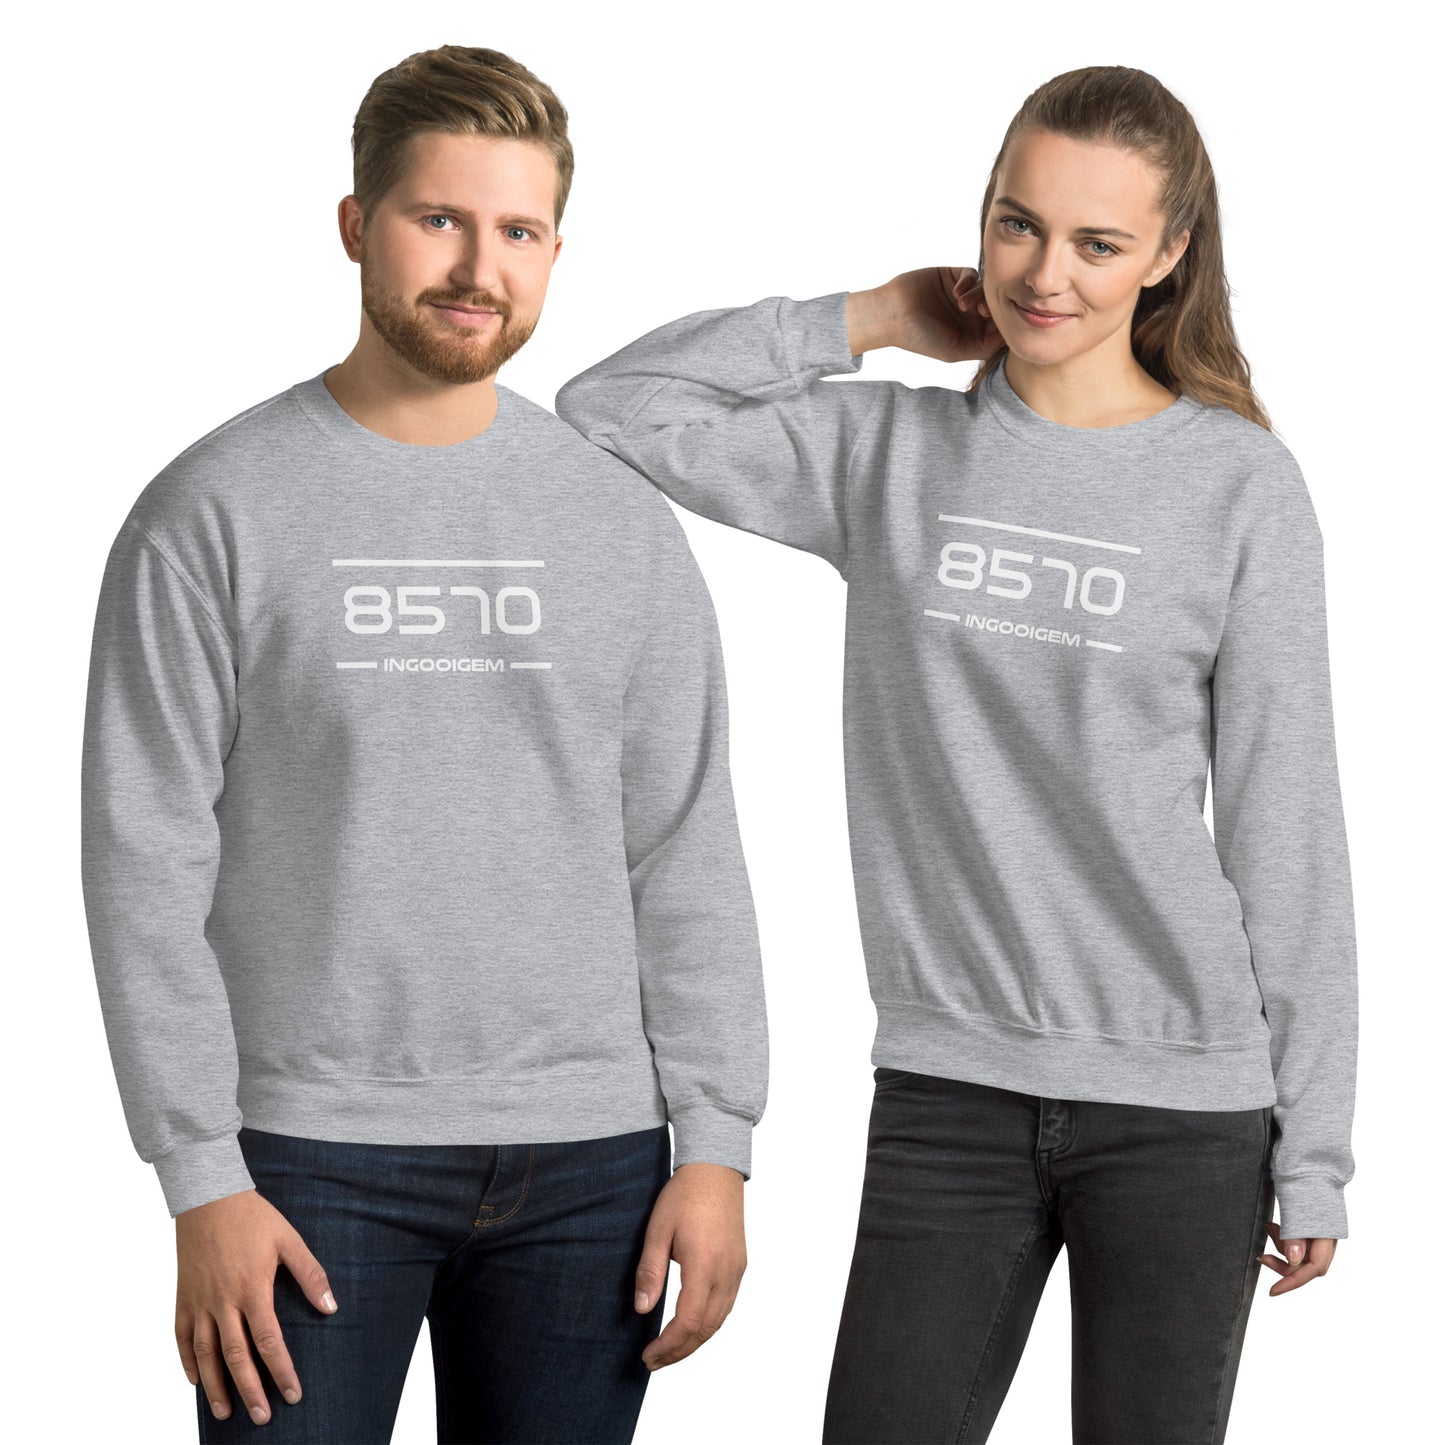 Sweater - 8570 - Ingooigem (M/V)